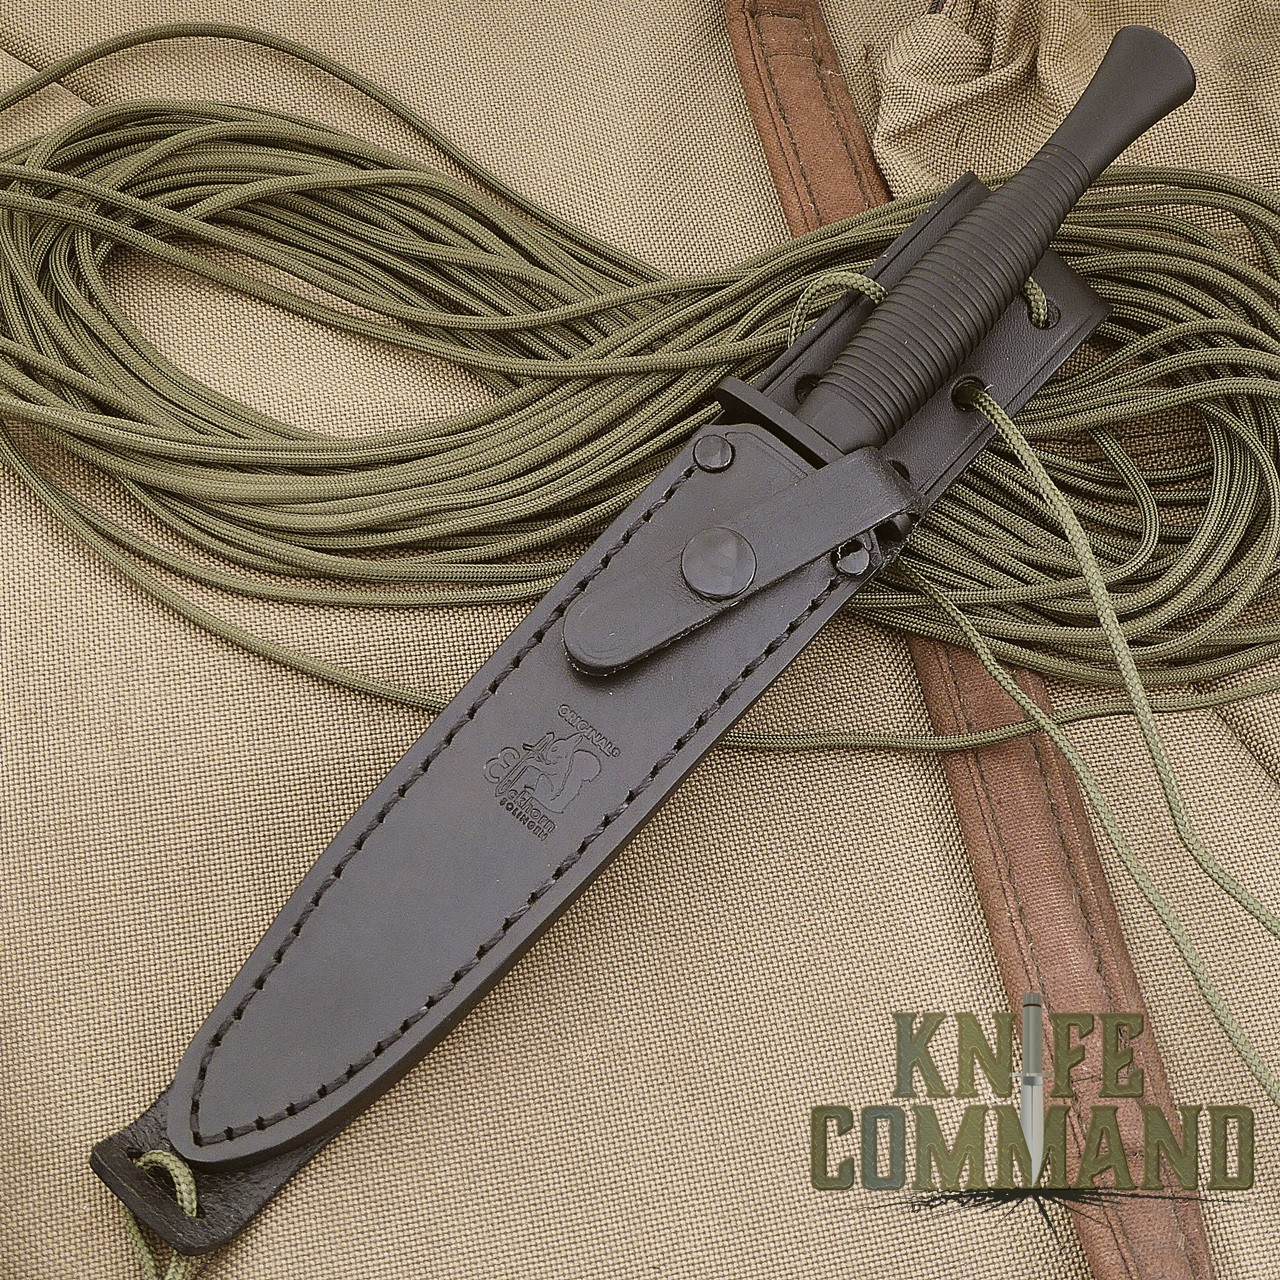 Eickhorn Solingen FS2000 Fairbairn Sykes Combat Dagger.  Black leather sheath with ties.